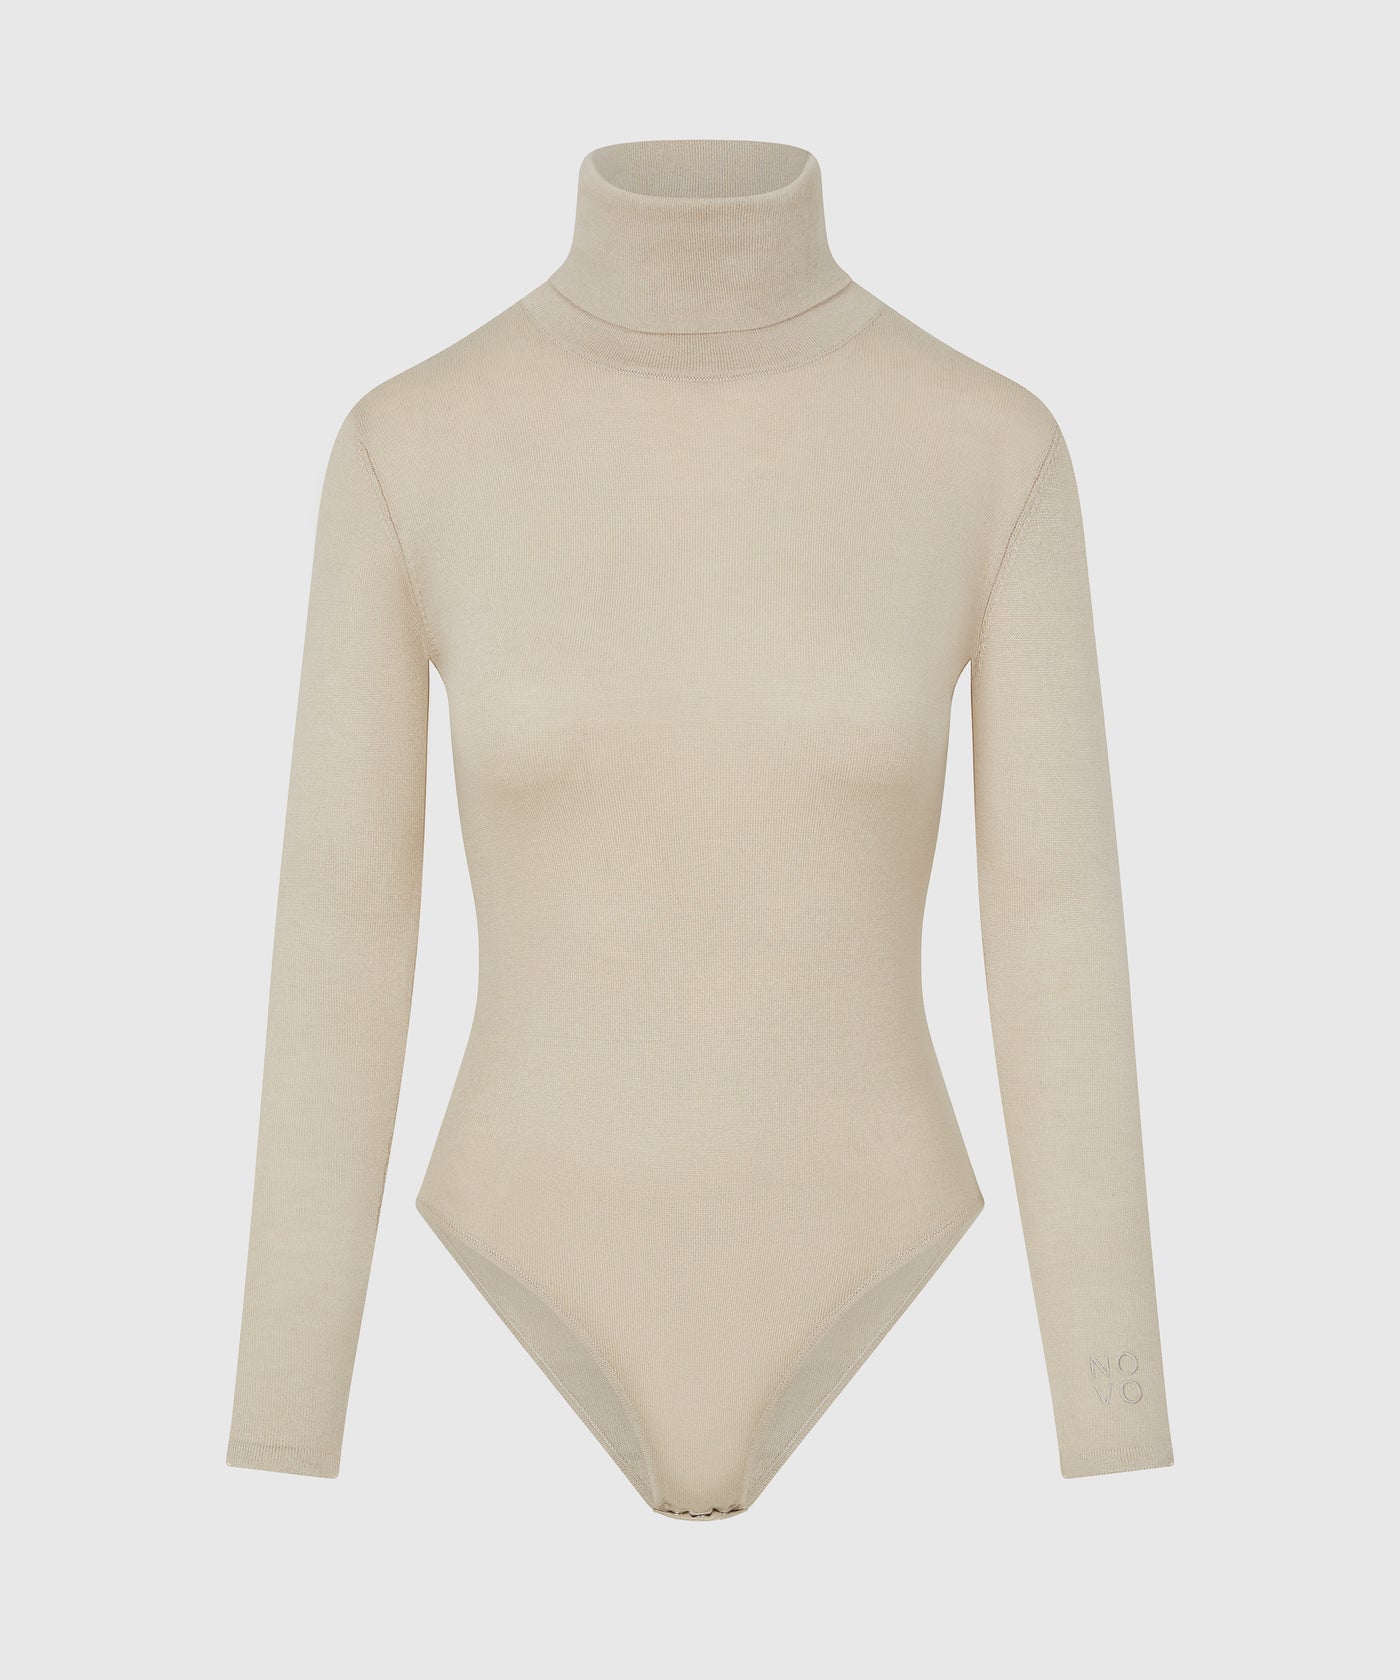 100% Silk and Cashmere Turtleneck Bodysuit - Sand